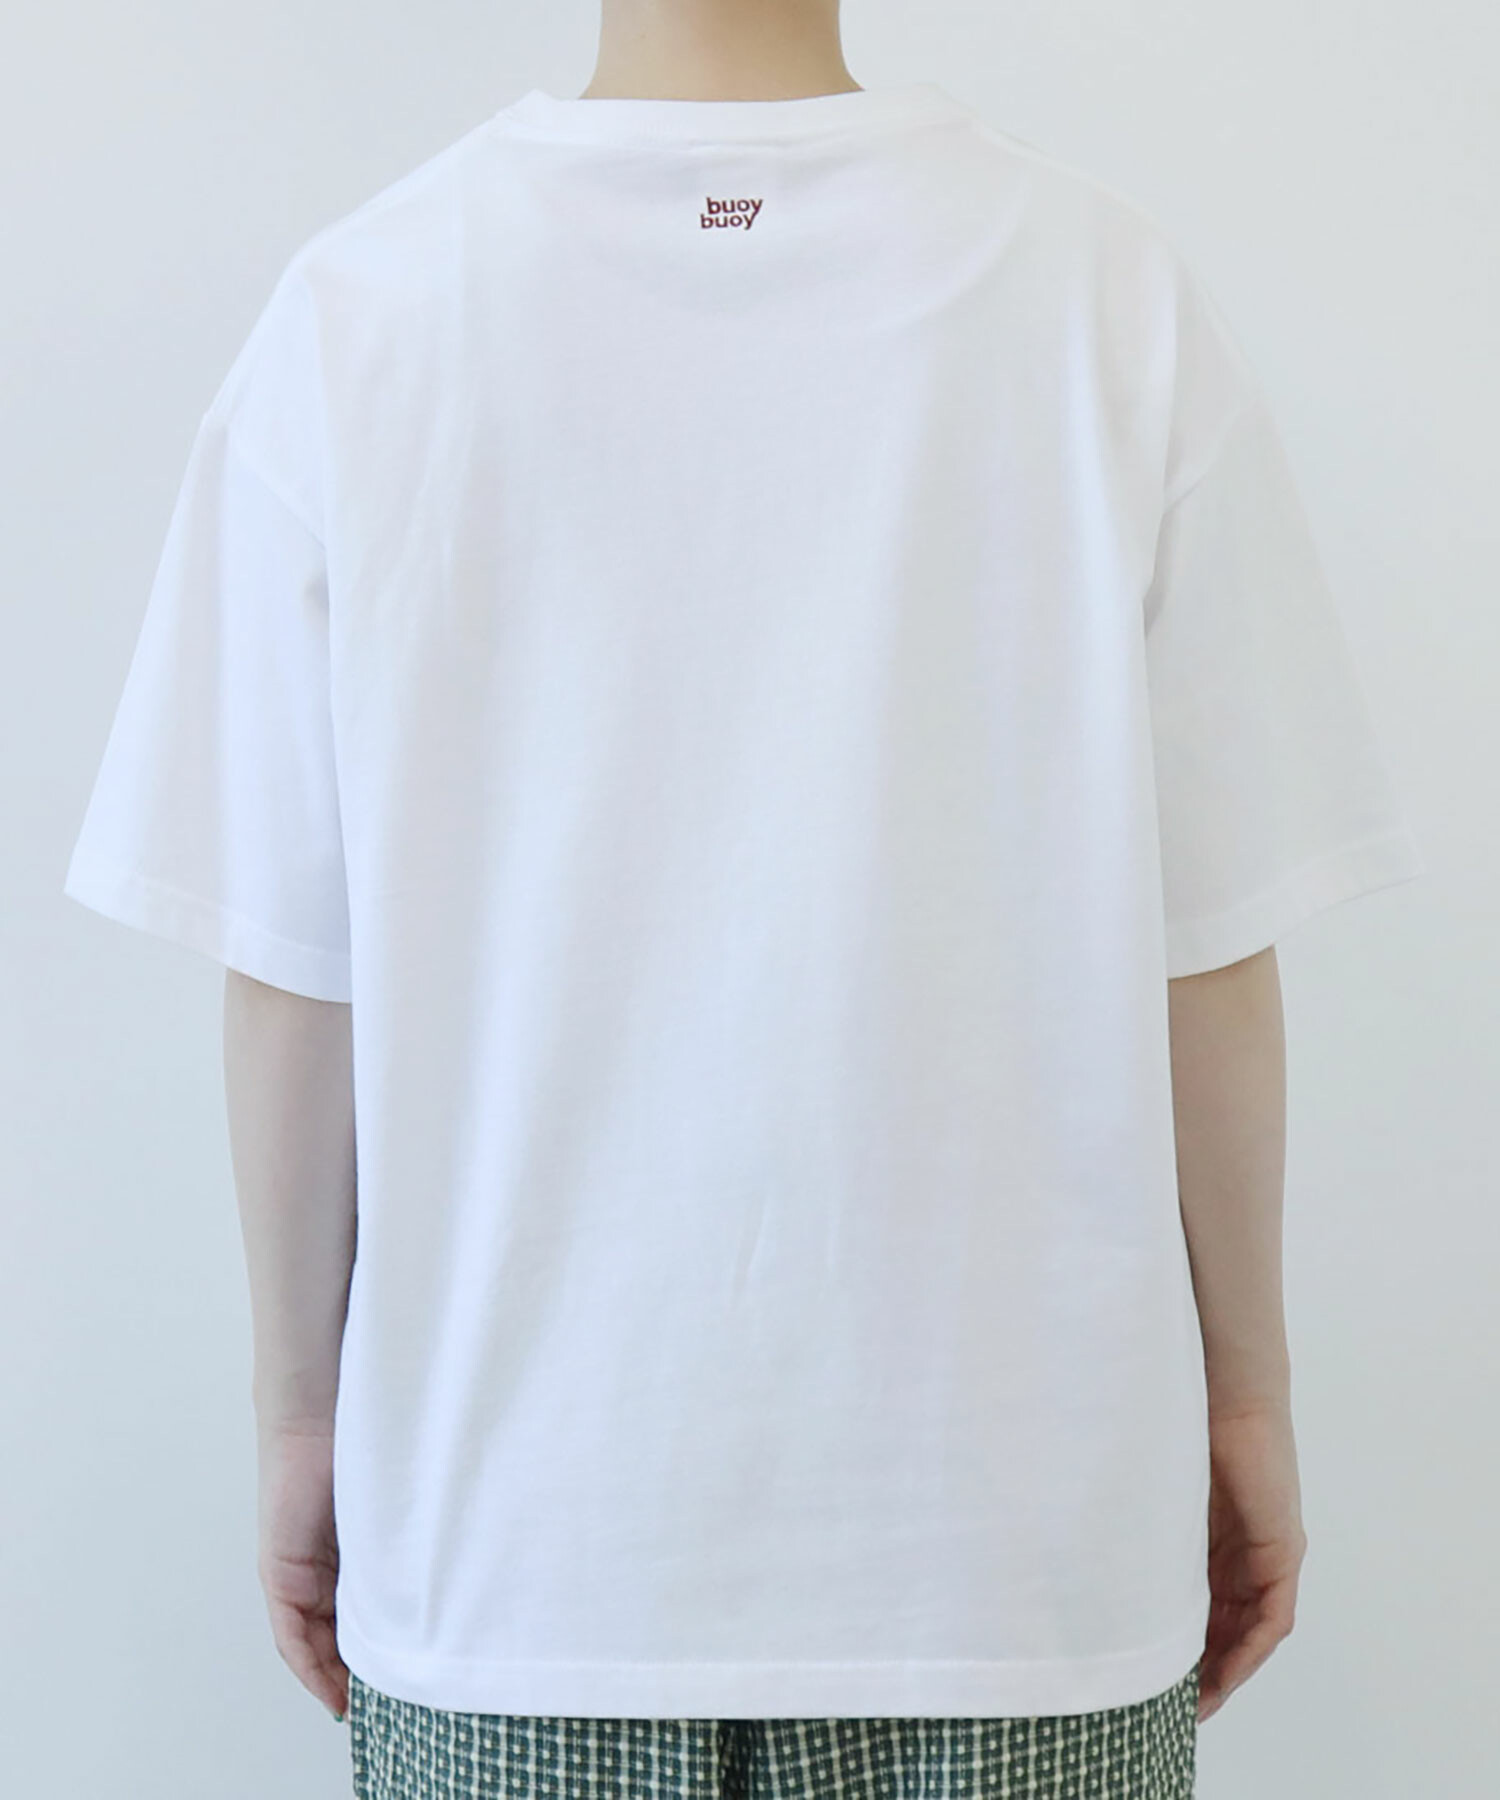 AMBIDEX Store 【予約販売】○number 2 T-シャツ(F ネイビー): FLAT 